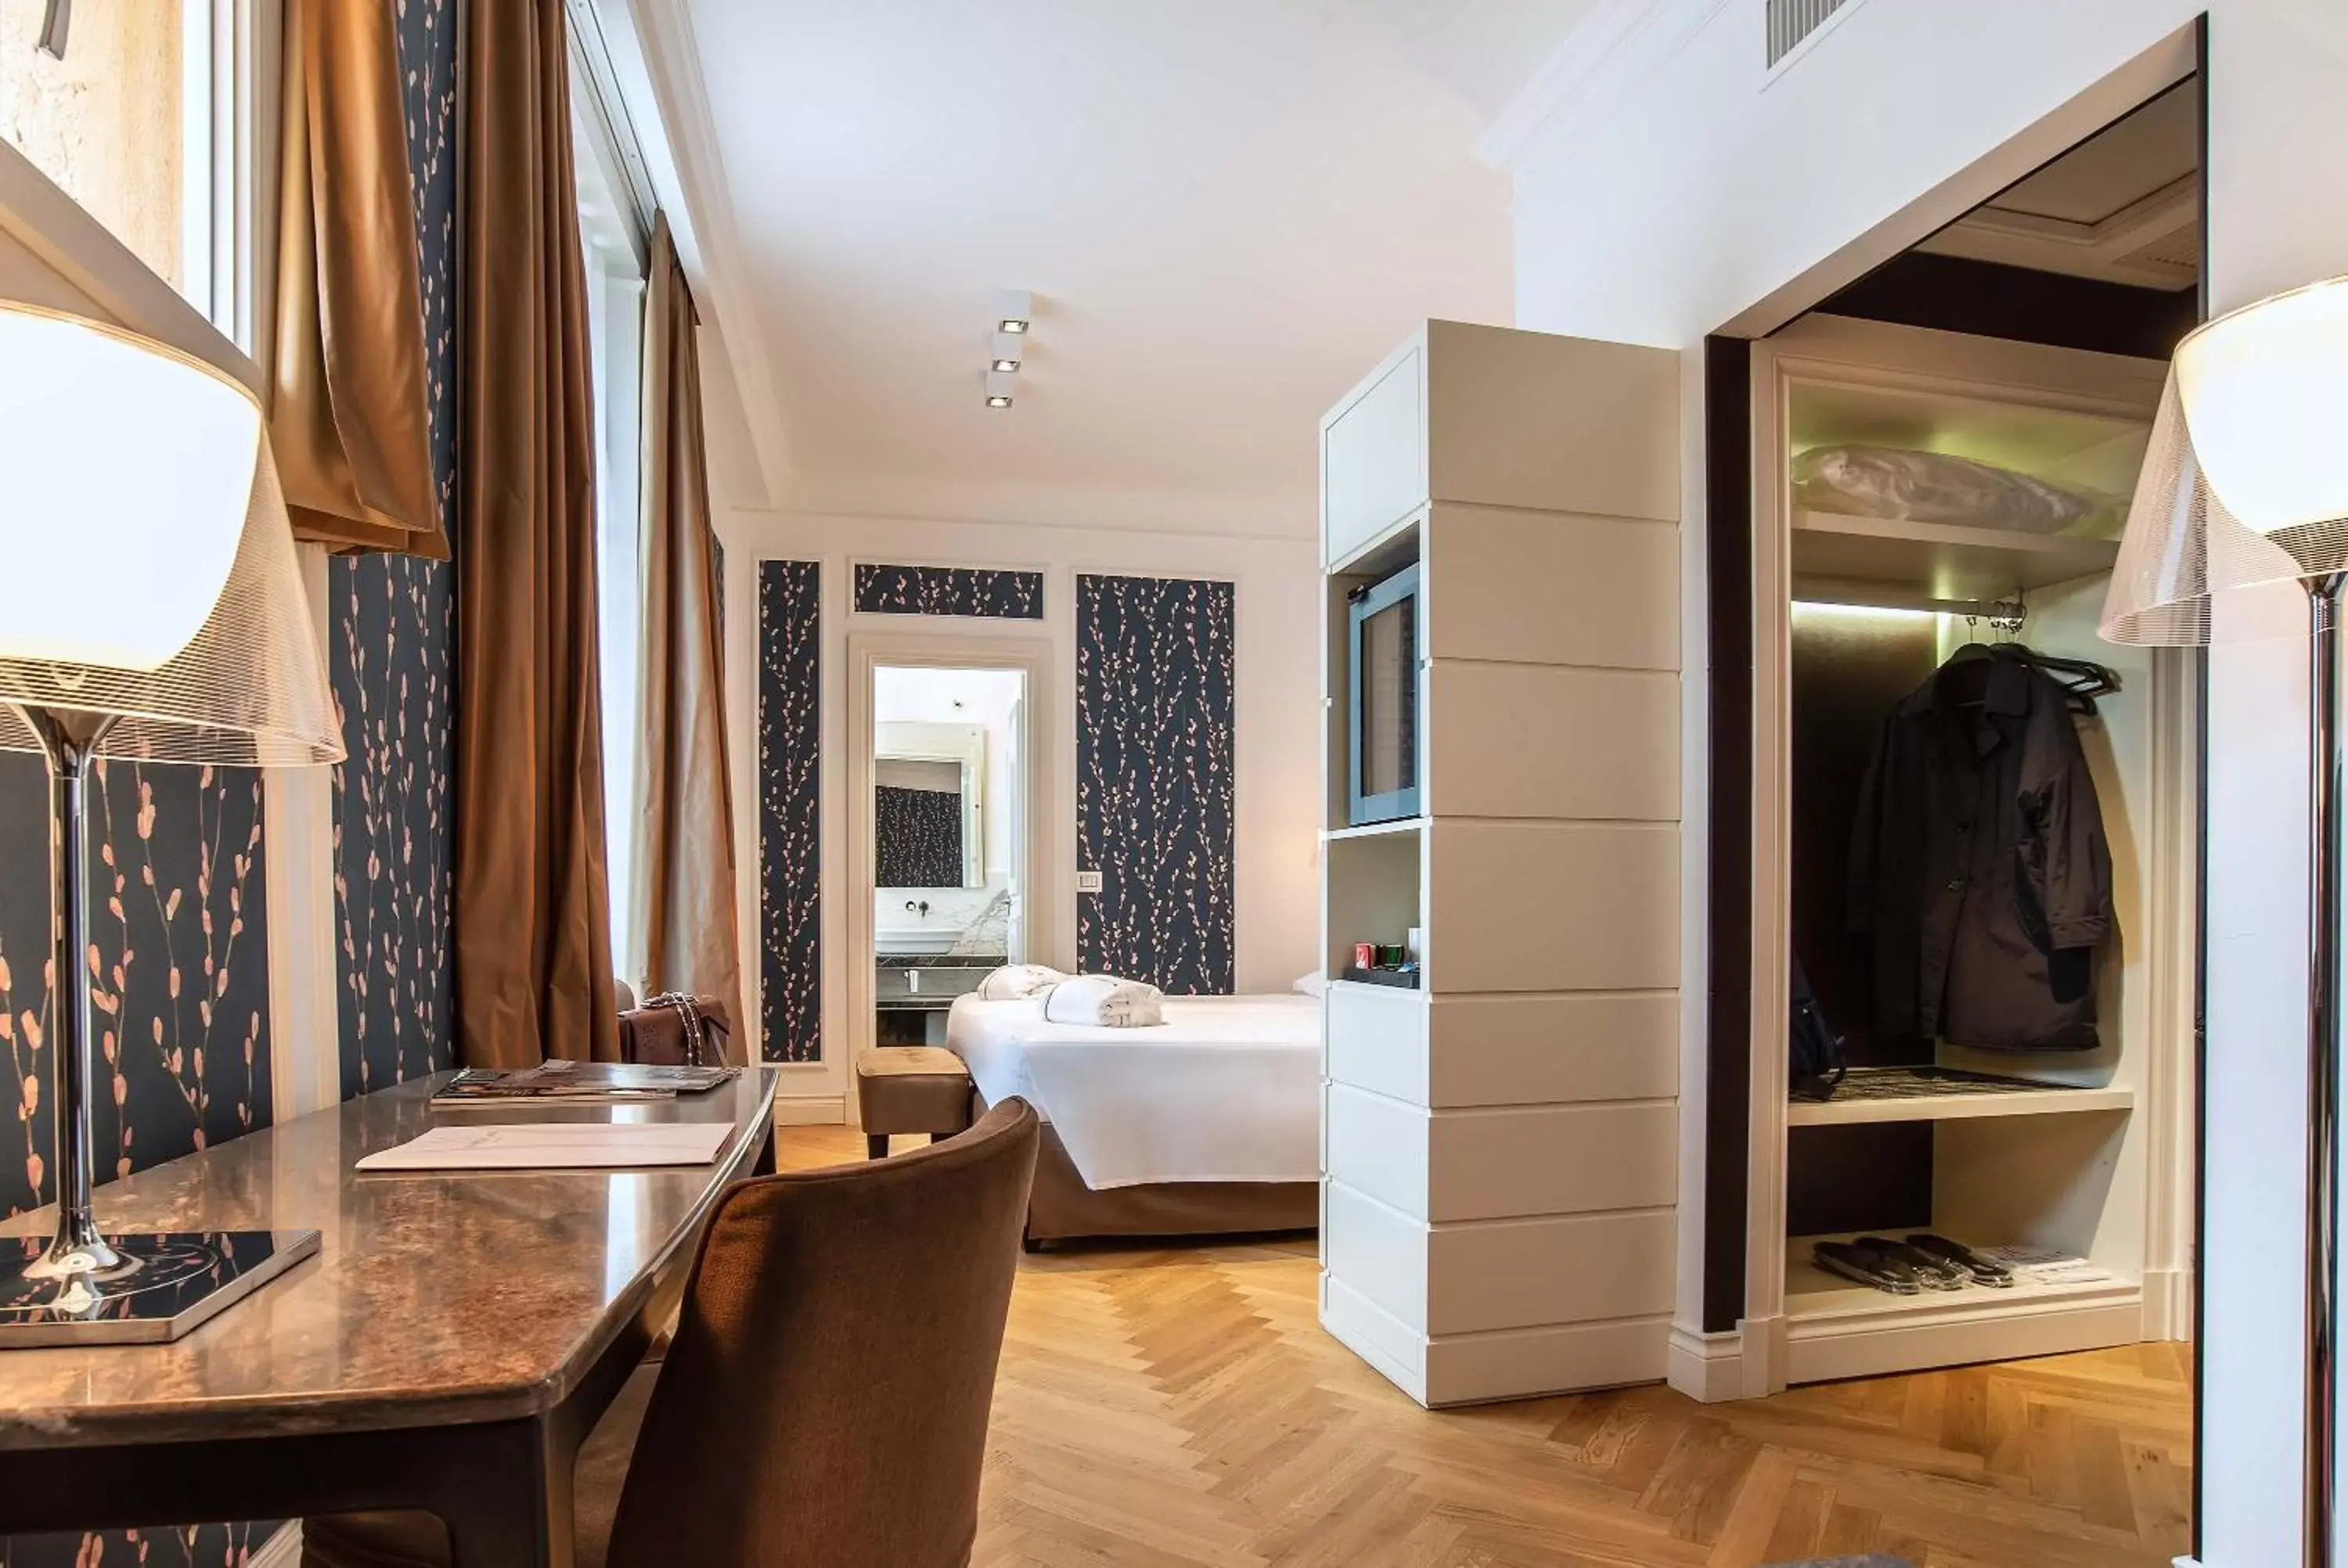 Photo of the whole room, Bathroom in Hotel Damaso